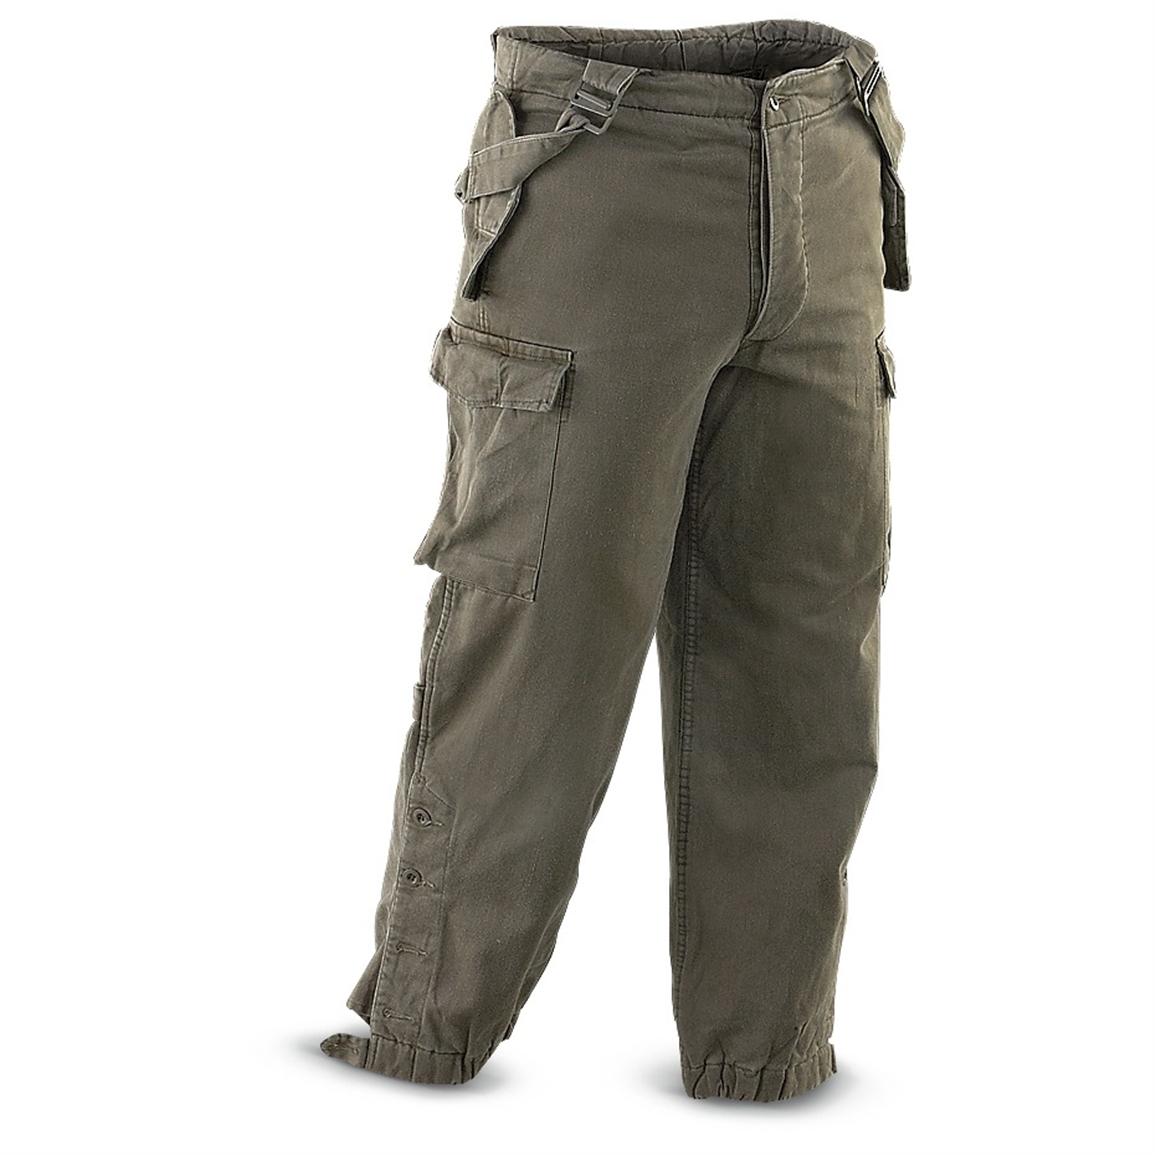 2 Used Austrian Military Surplus Pants with Suspenders, Olive Drab ...